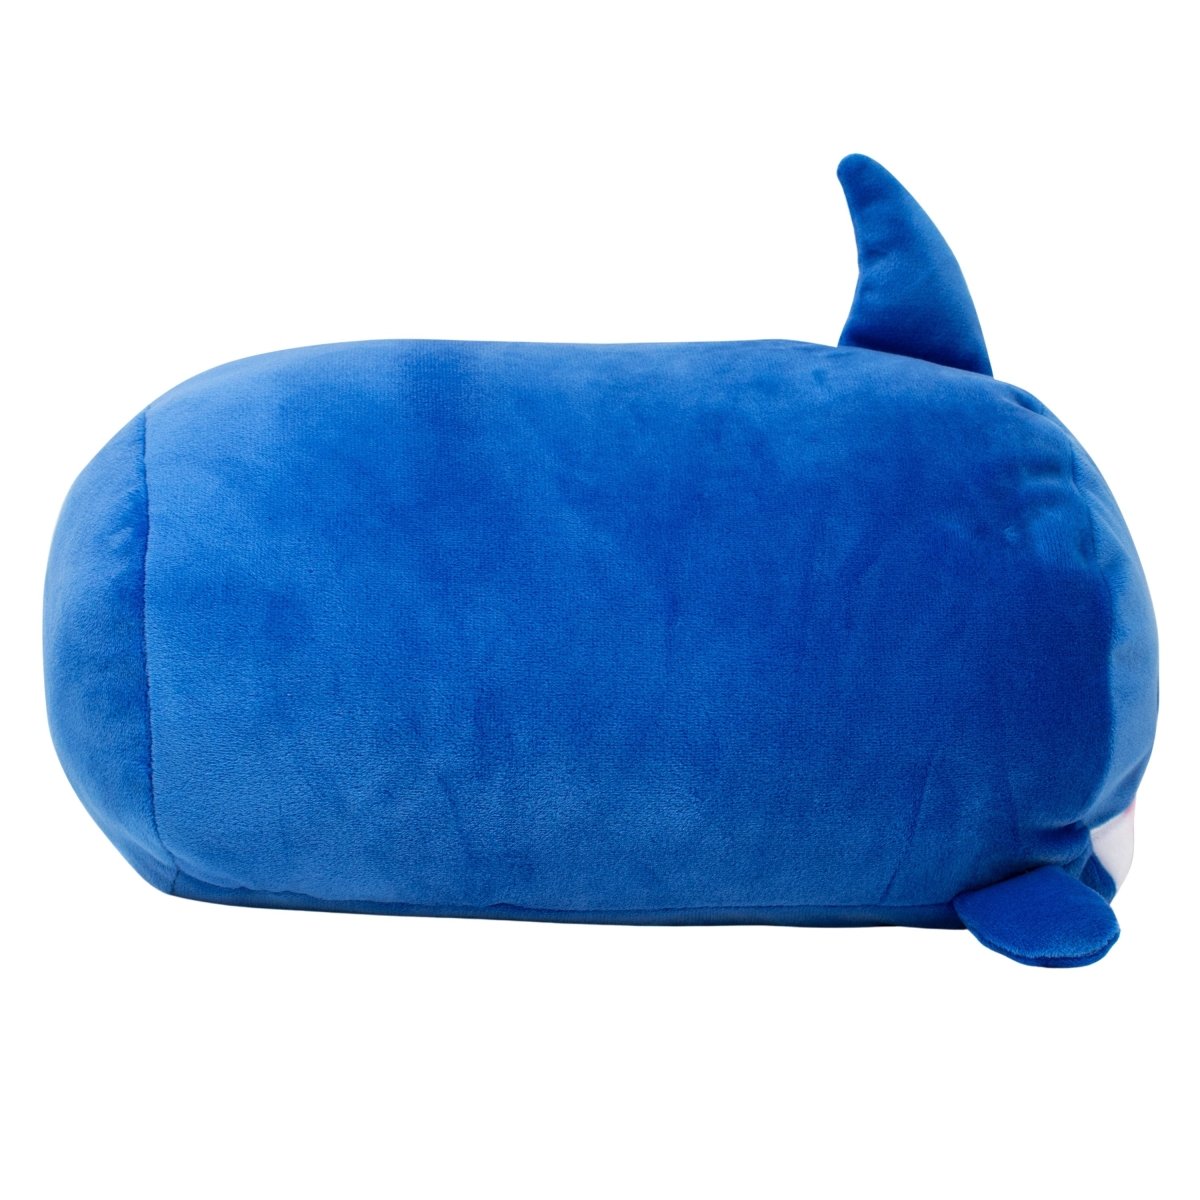 Blue shark stuffed animal